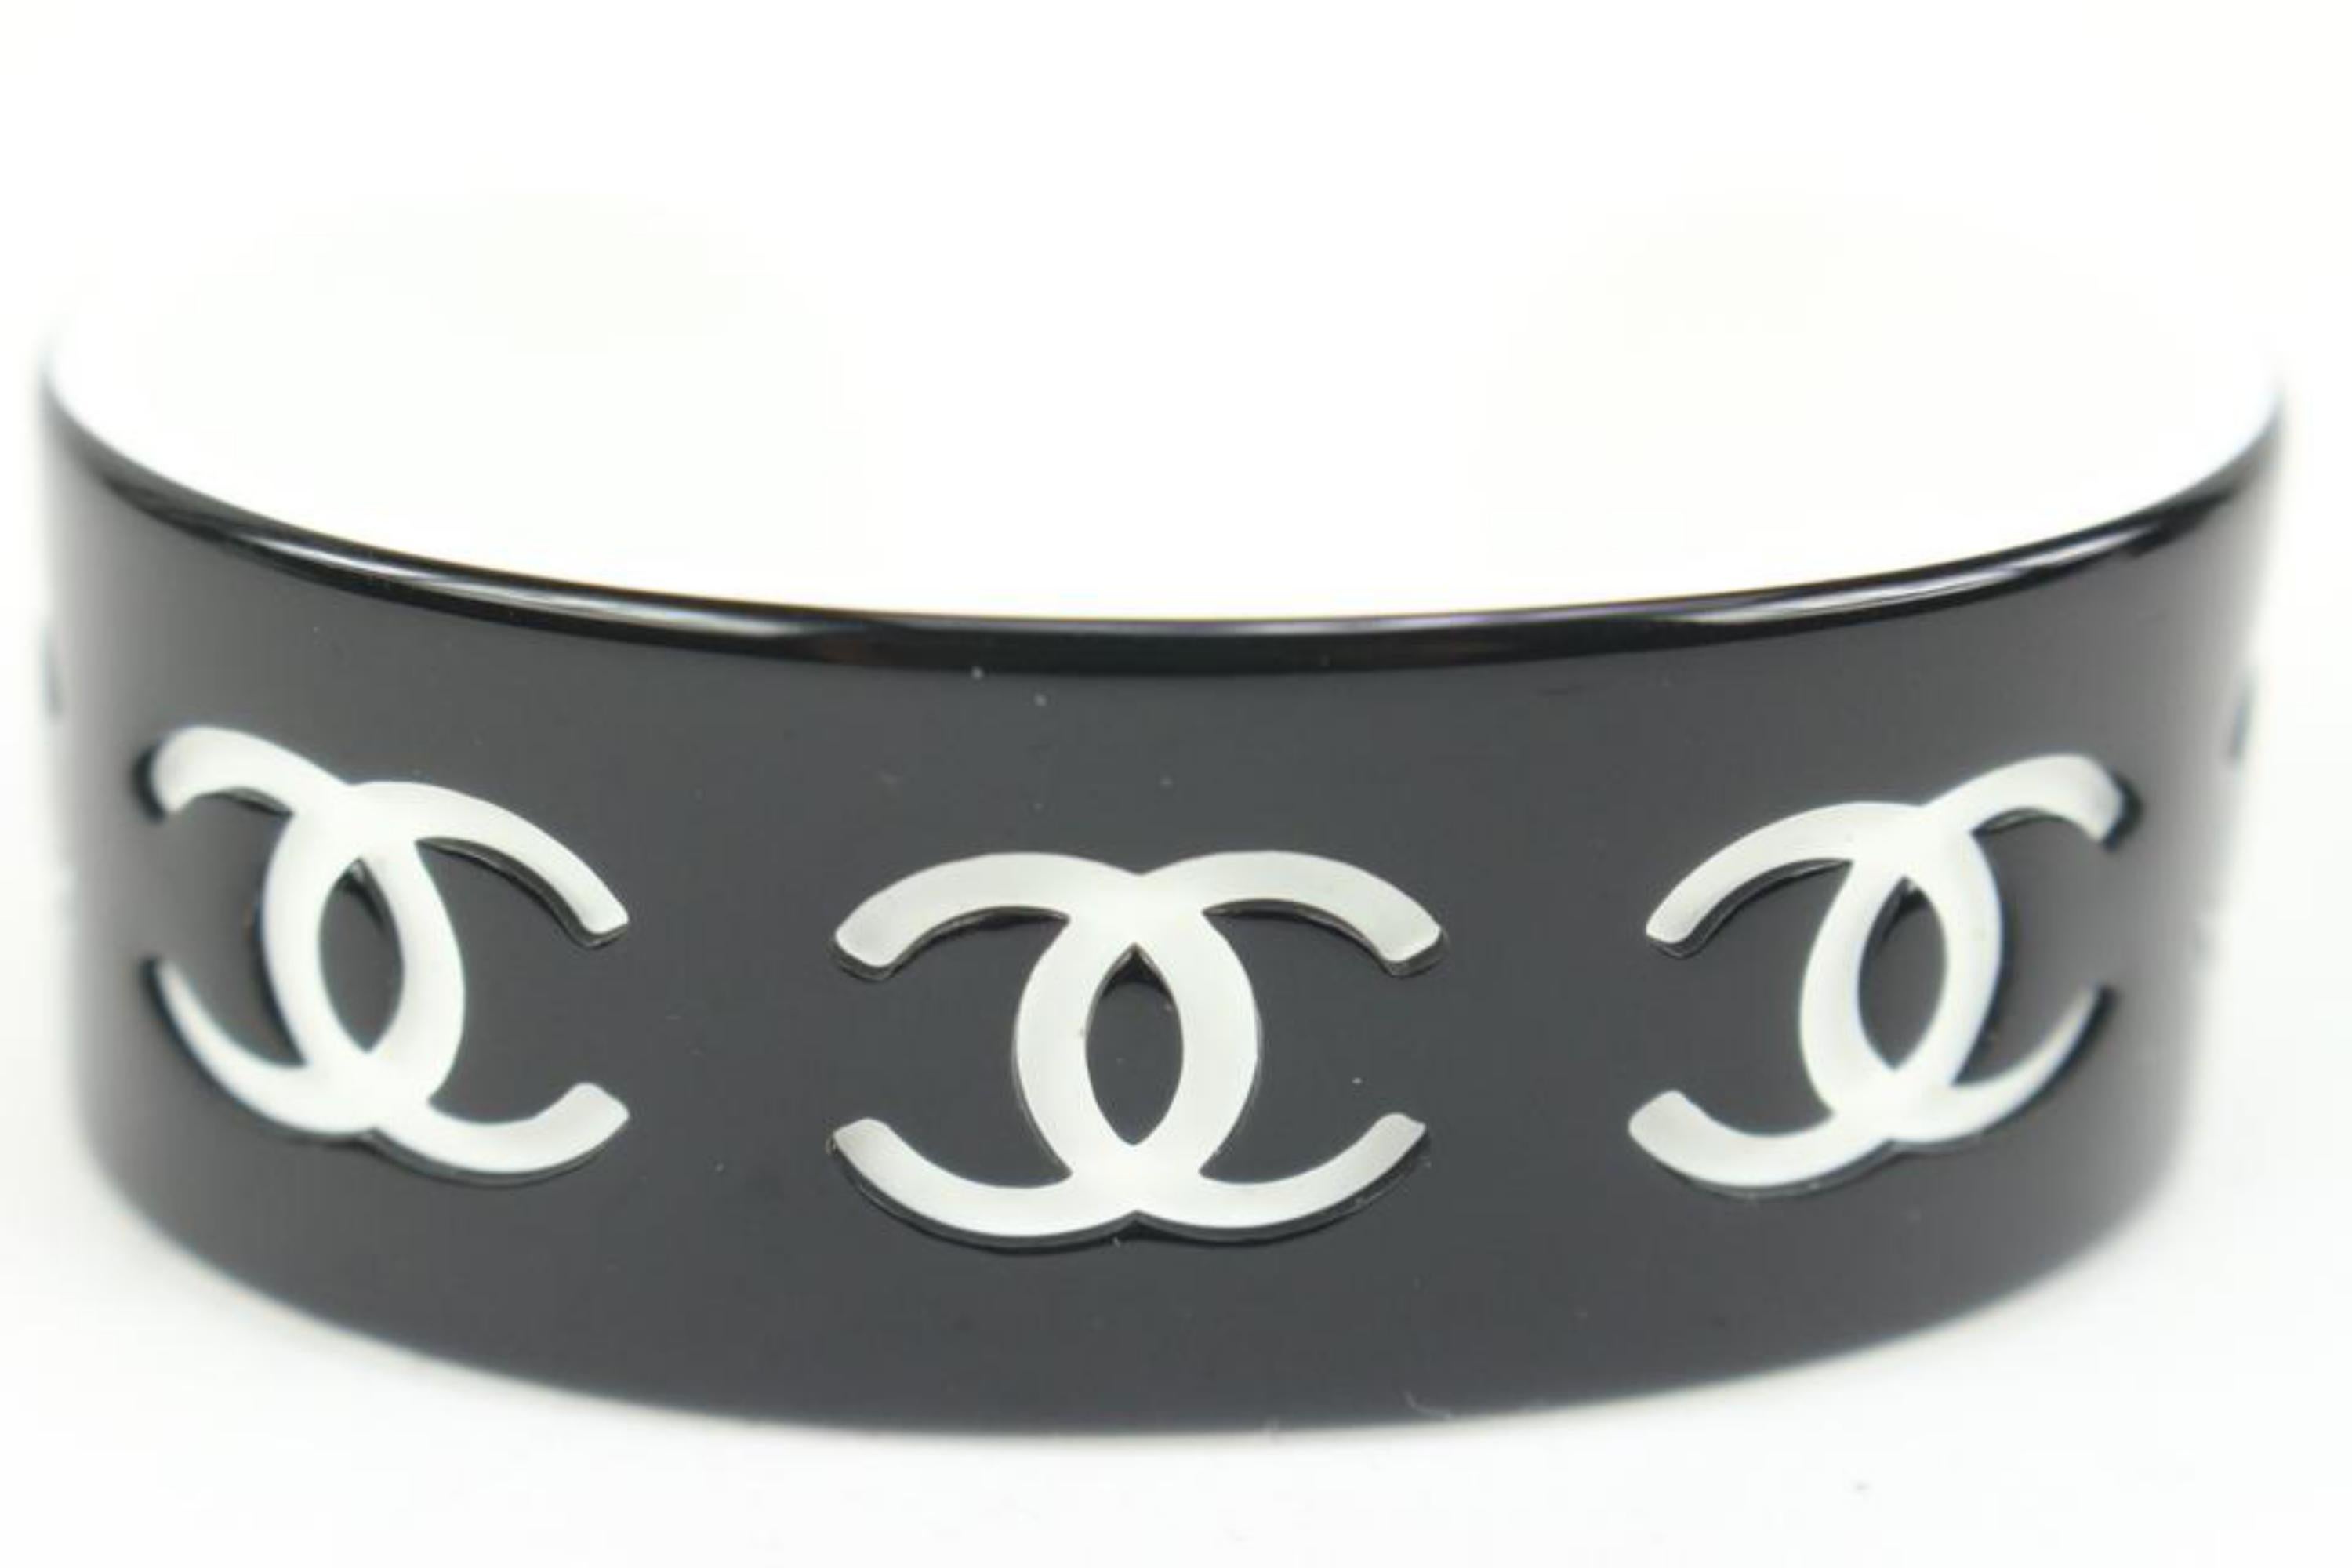 Chanel 02P Black x White CC Logo Acrylic Cuff Bracelet Bangle 70cz418s 6